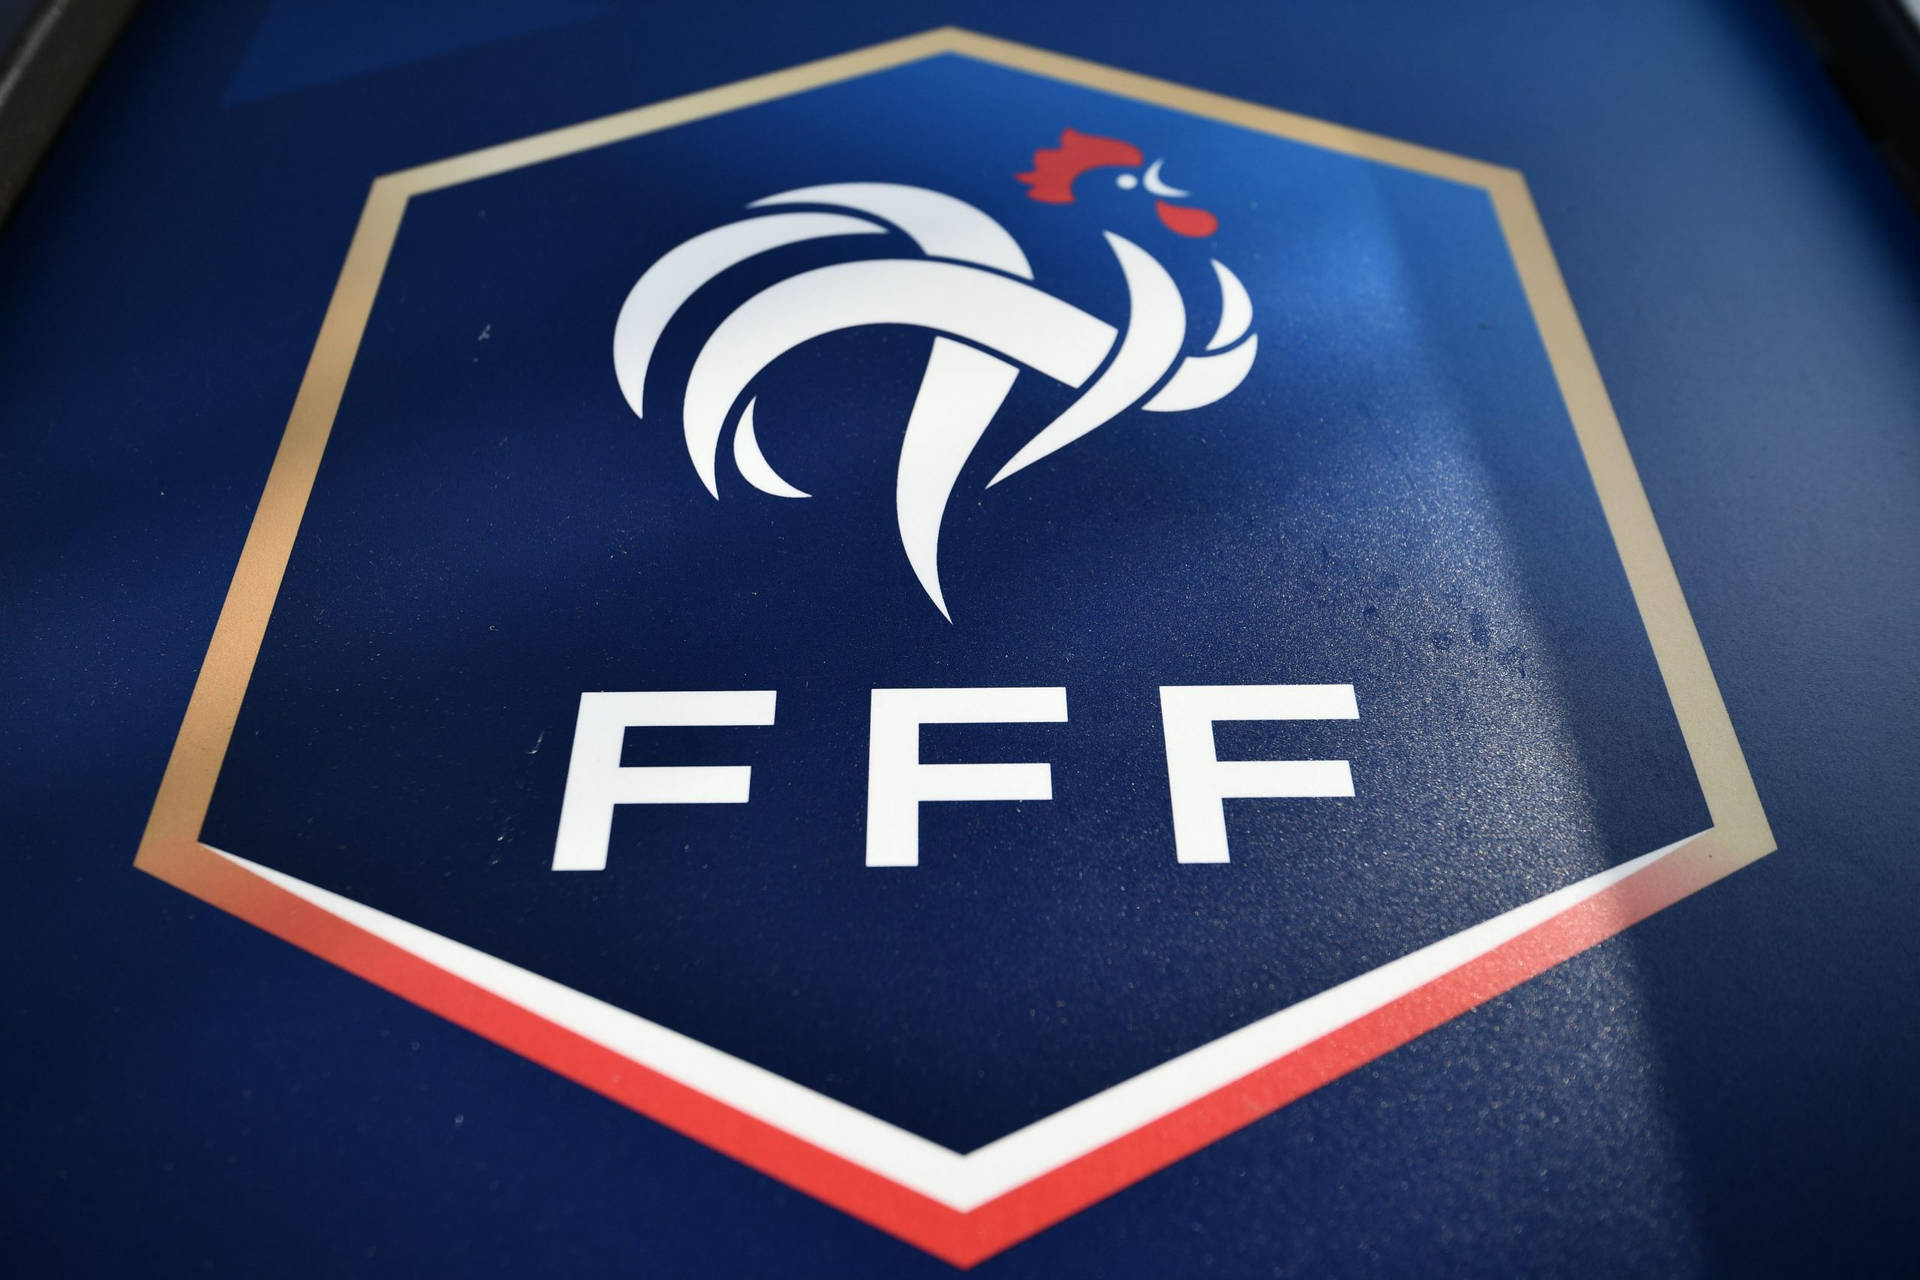 France National Football Team Printed Logo Wallpaper